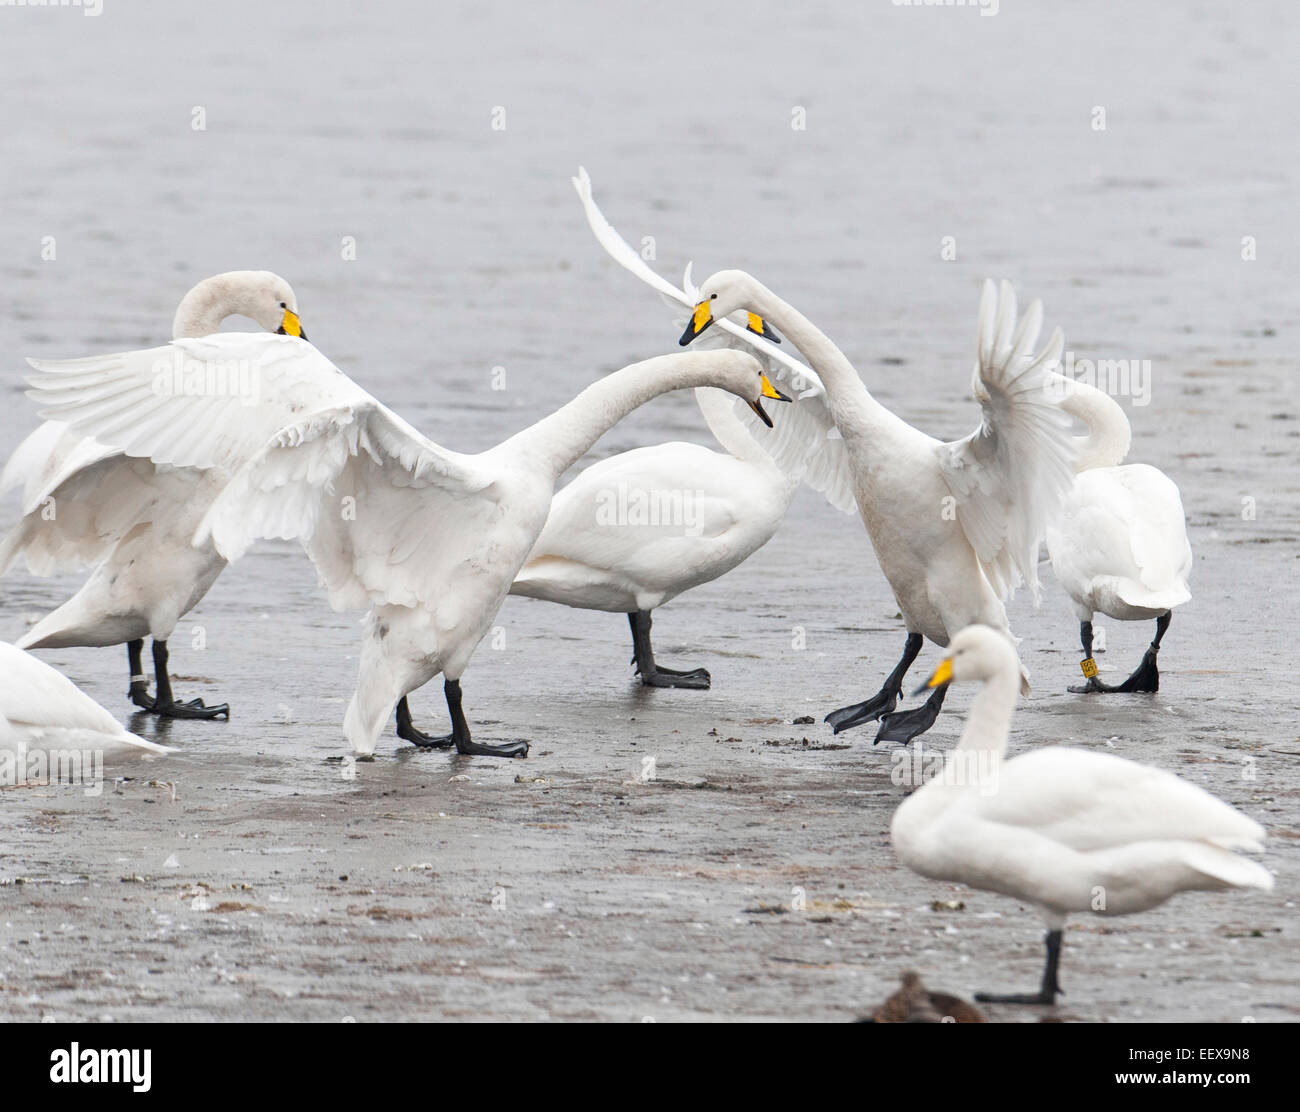 Whooper swans Cygnus cygnus on ice showing aggressive behavior. Stock Photo